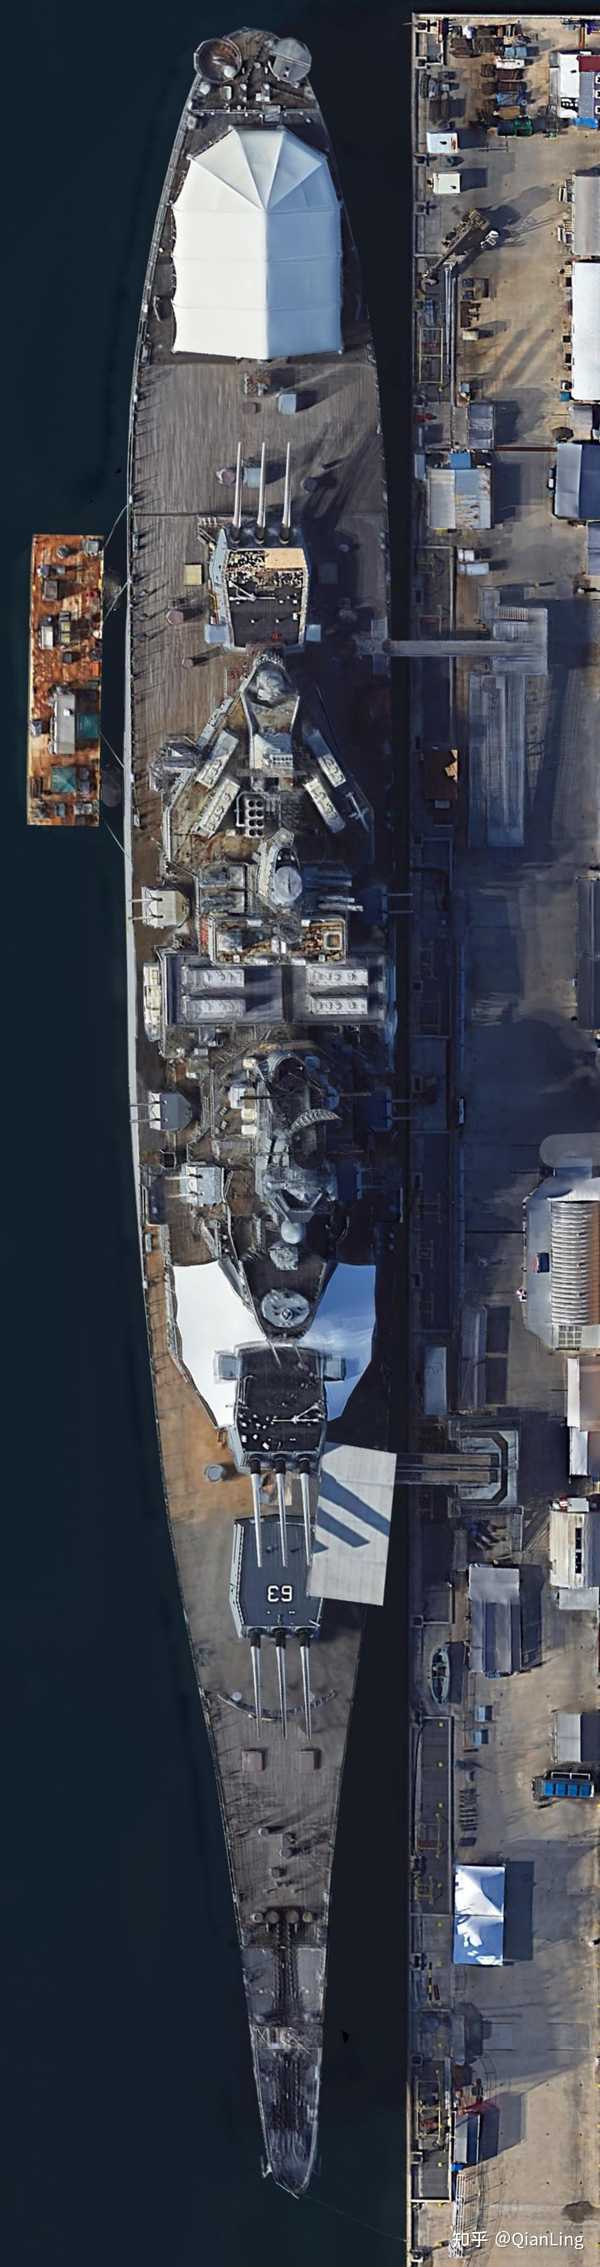 qianling 的想法: 卫星地图上,珍珠港的密苏里号战列舰,分… 